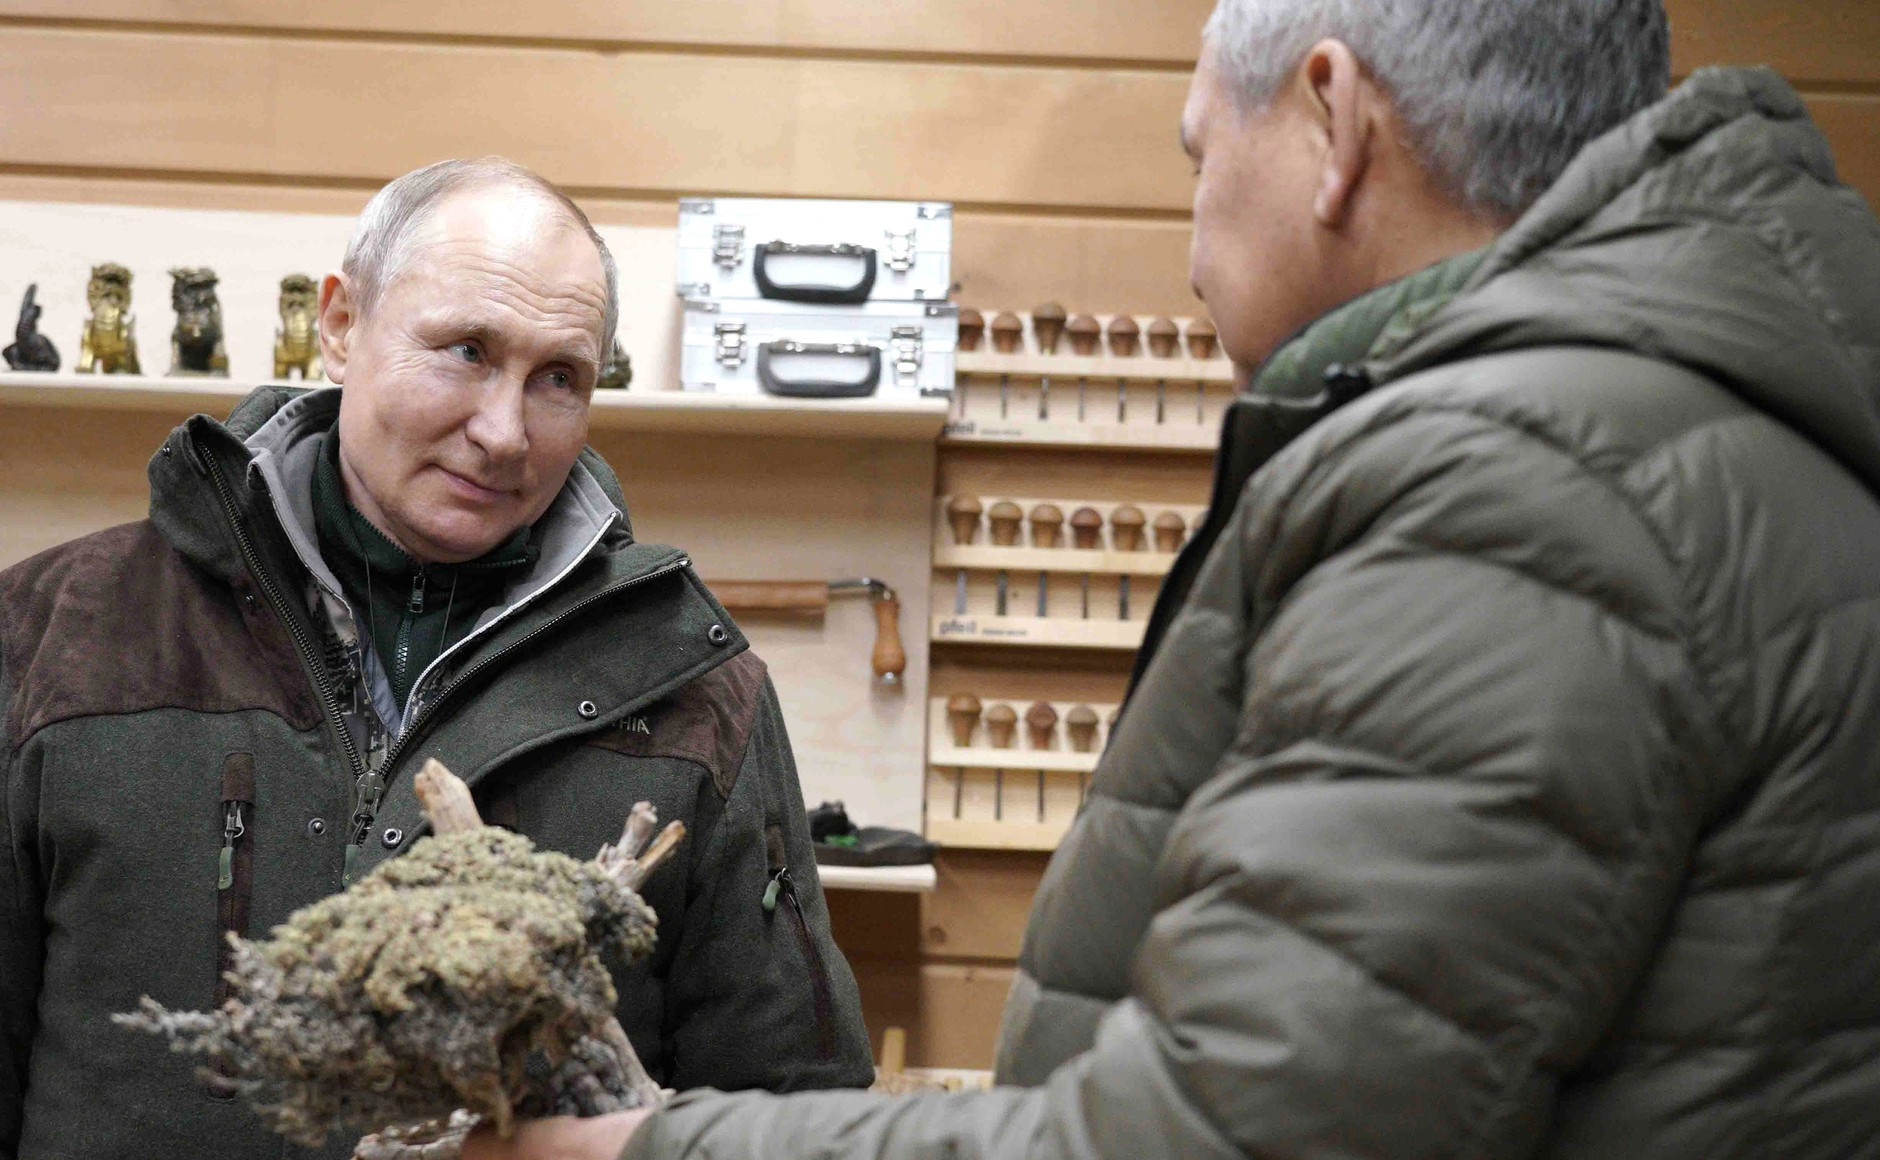 Путин и Шойгу в тайге 2021